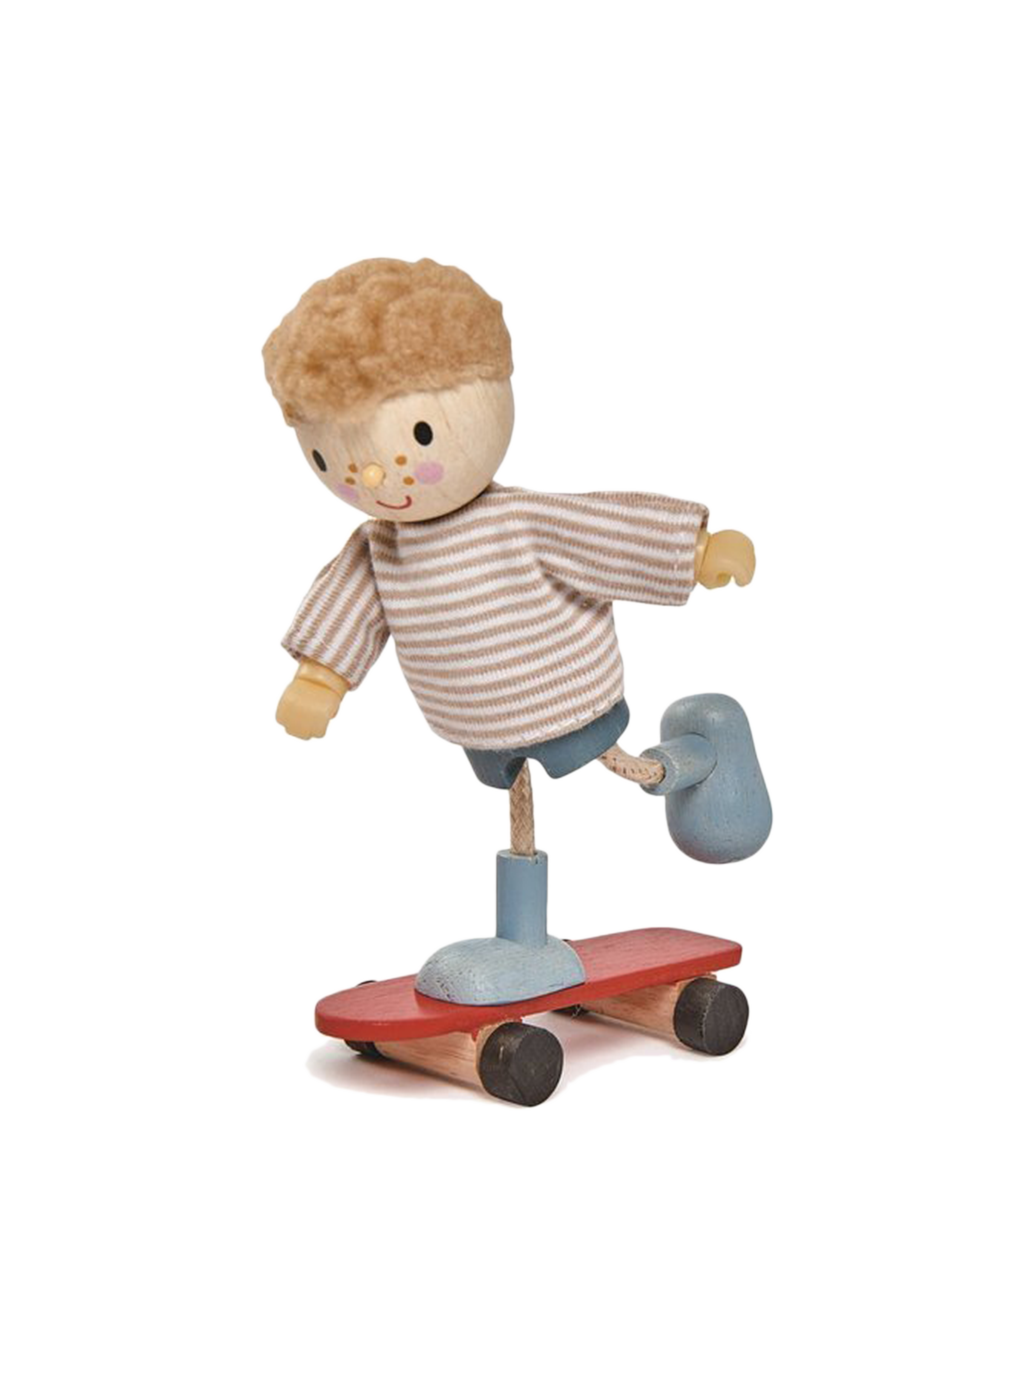 Edward on a skateboard wooden doll